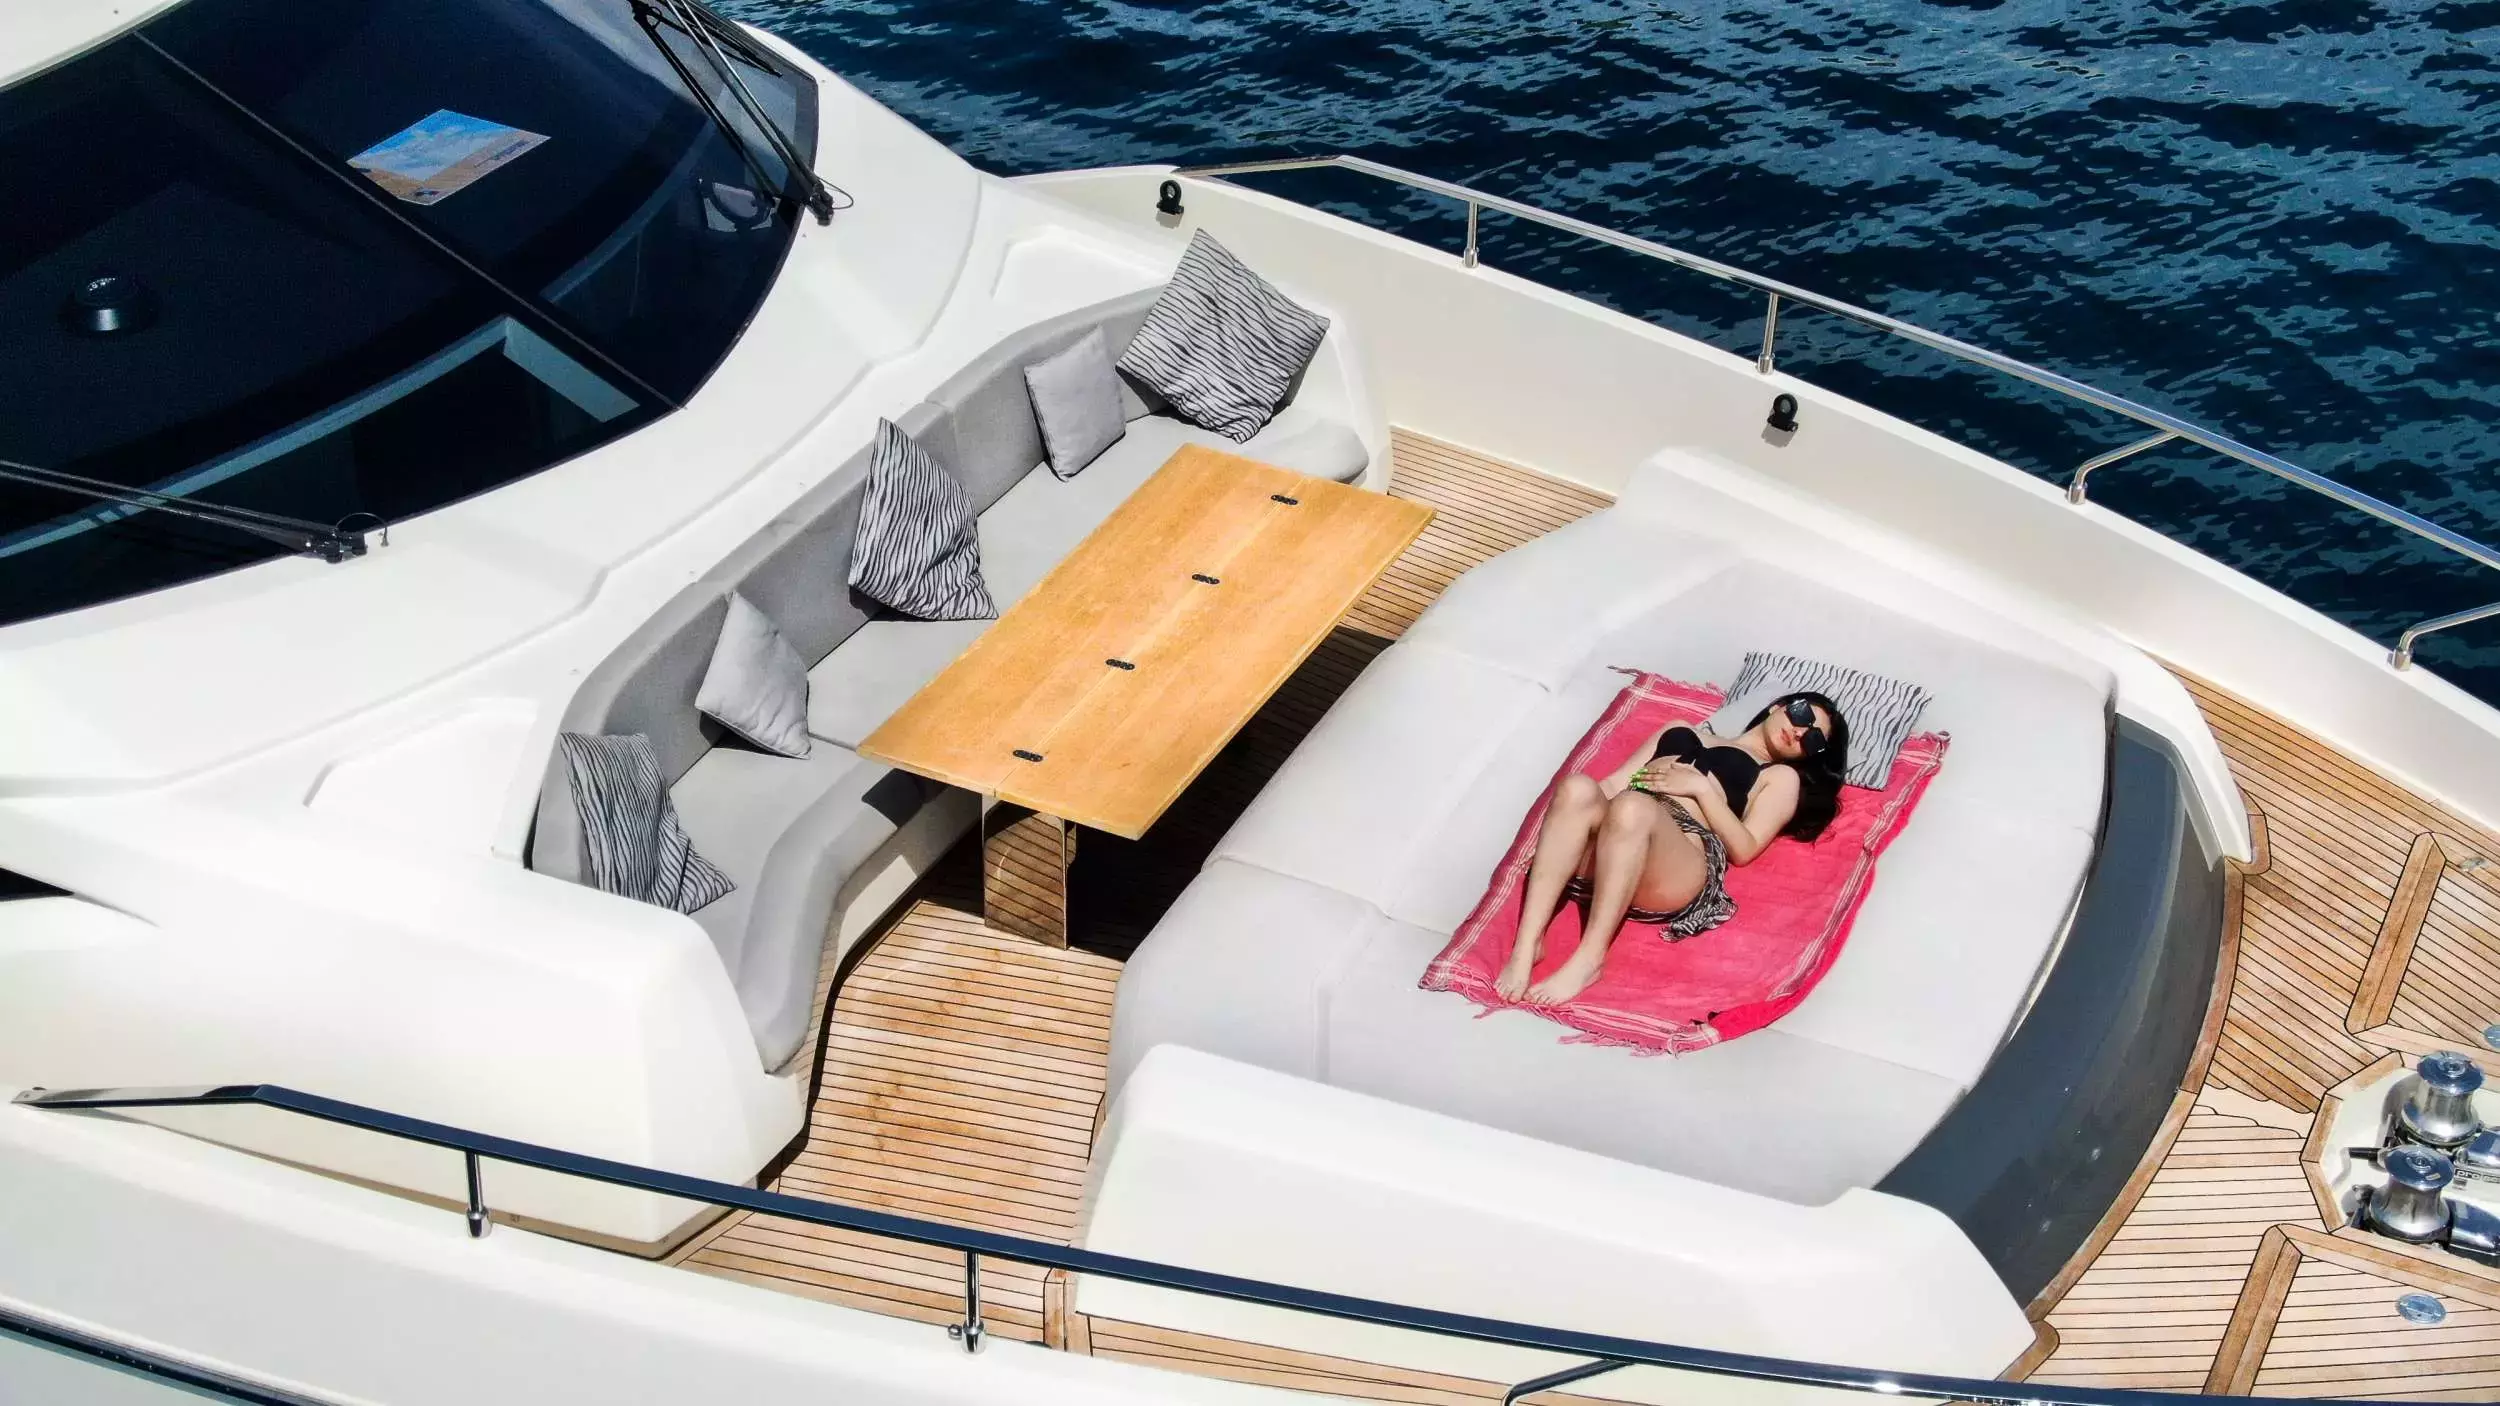 E3 by Ferretti - Special Offer for a private Motor Yacht Charter in Portofino with a crew